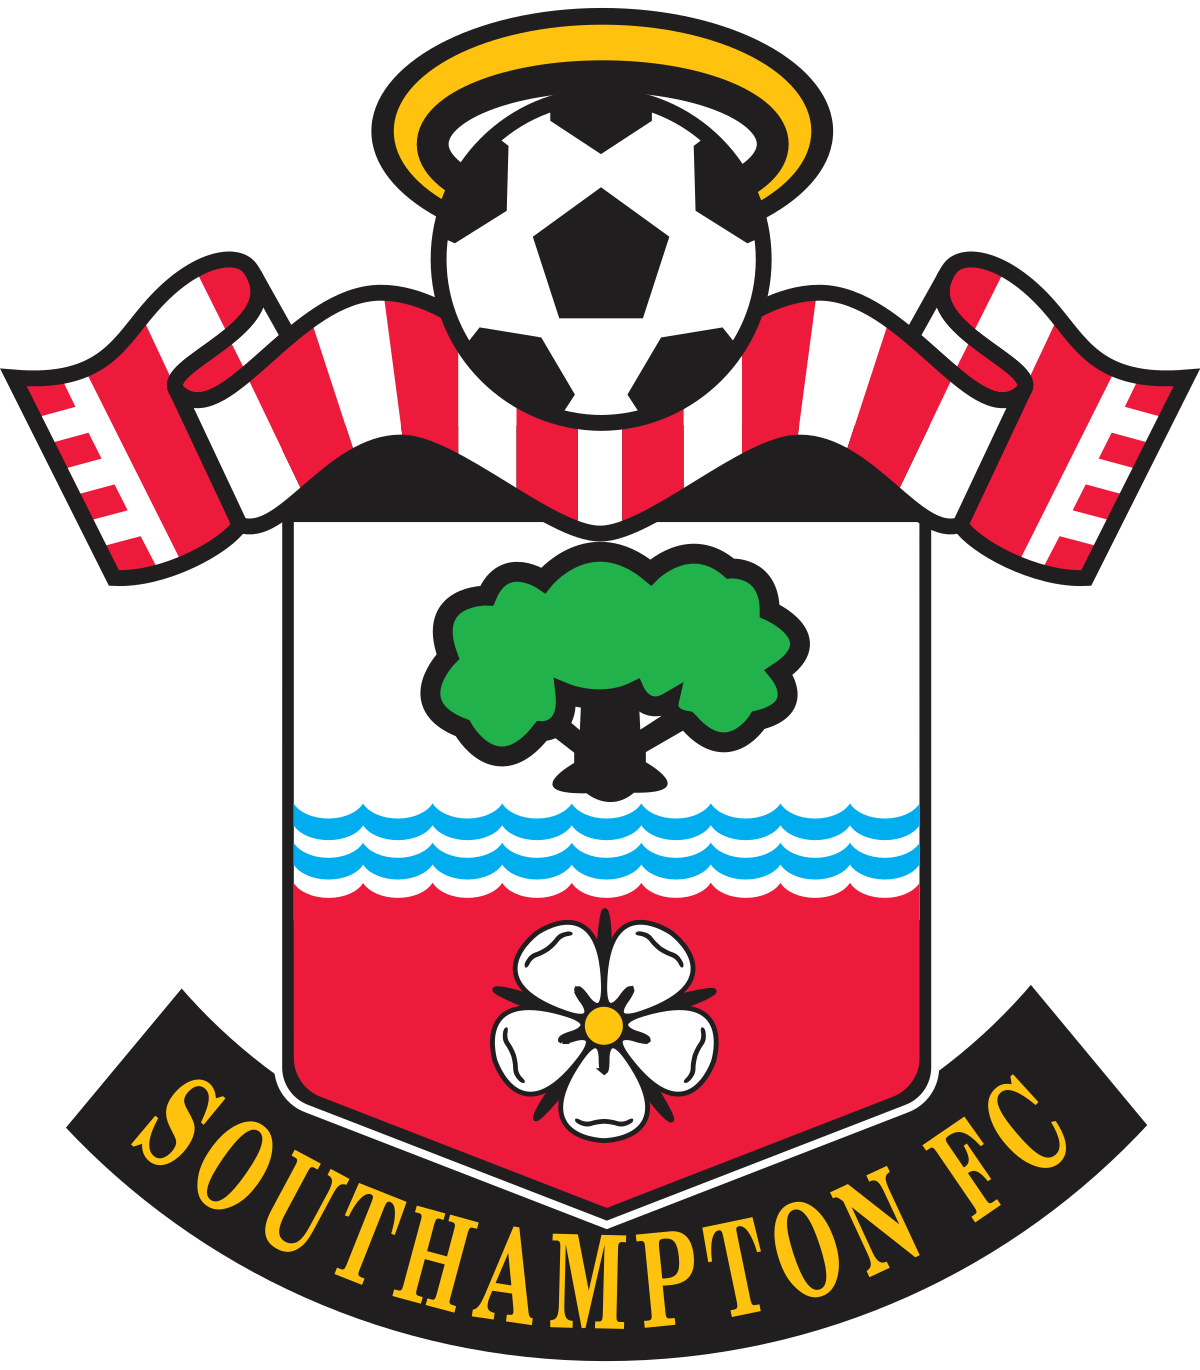 Саутгамптон U23 - Logo